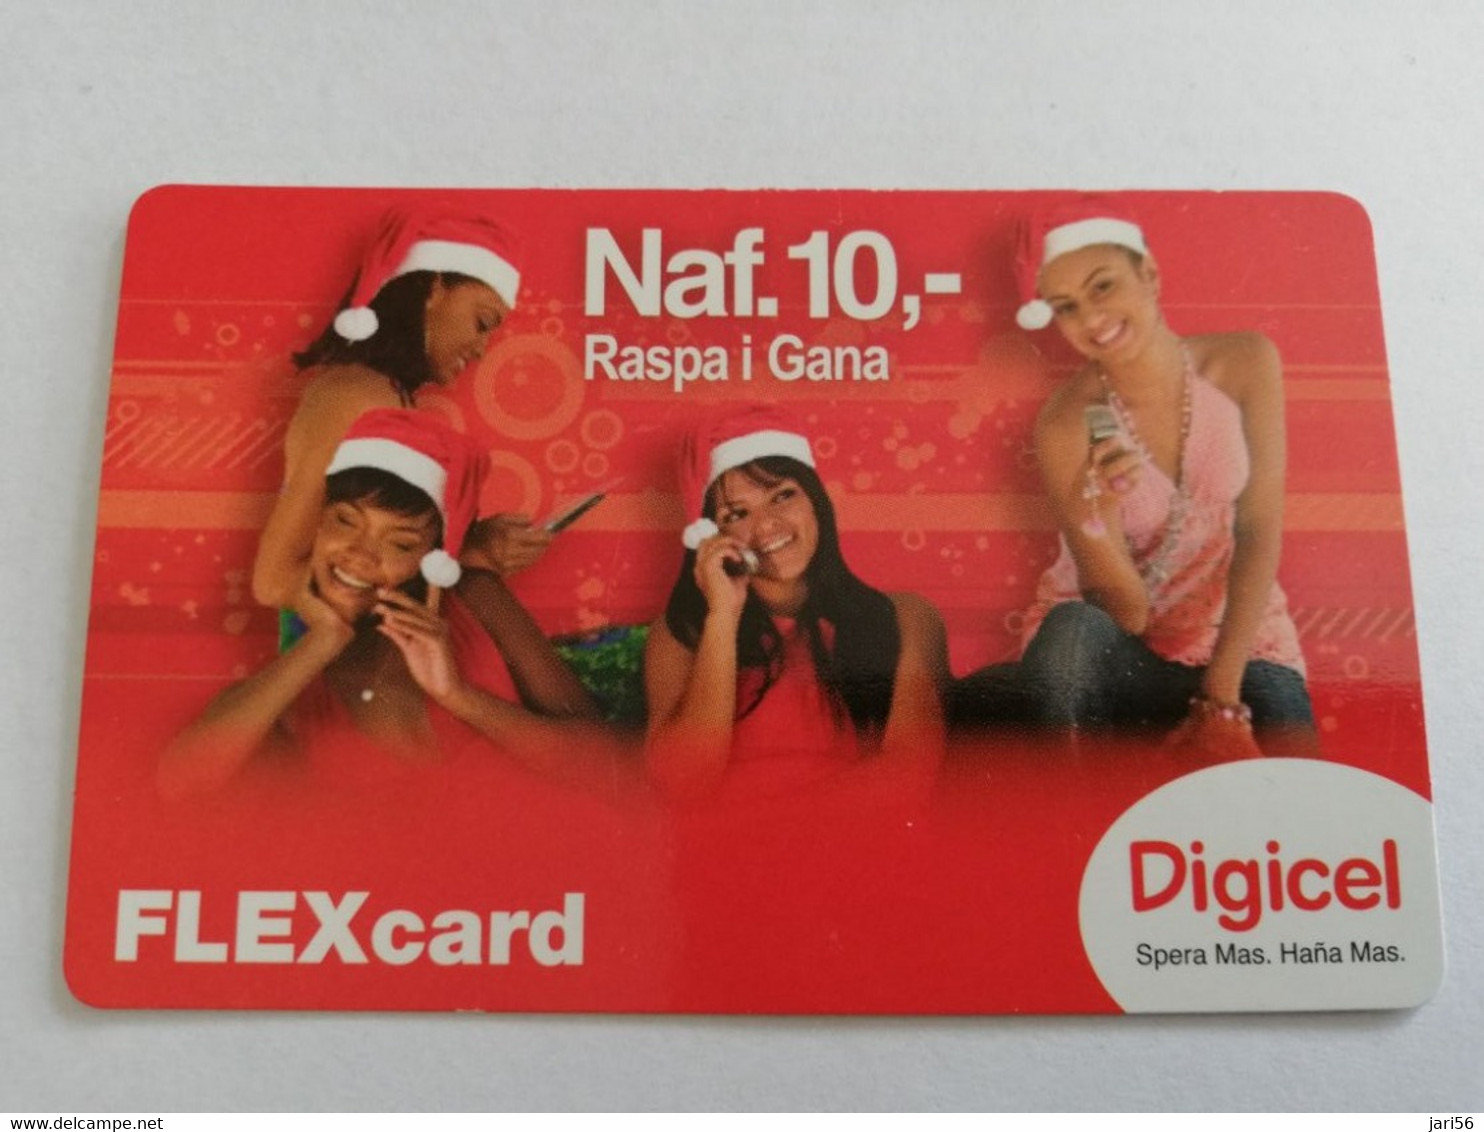 CURACAO  DIGICEL FLEX CARD  NAF 10,-  CHRISTMAS LADYS WITH PHON   DATE 05/09/2009   VERY FINE USED CARD     ** 5293AA** - Antillen (Niederländische)